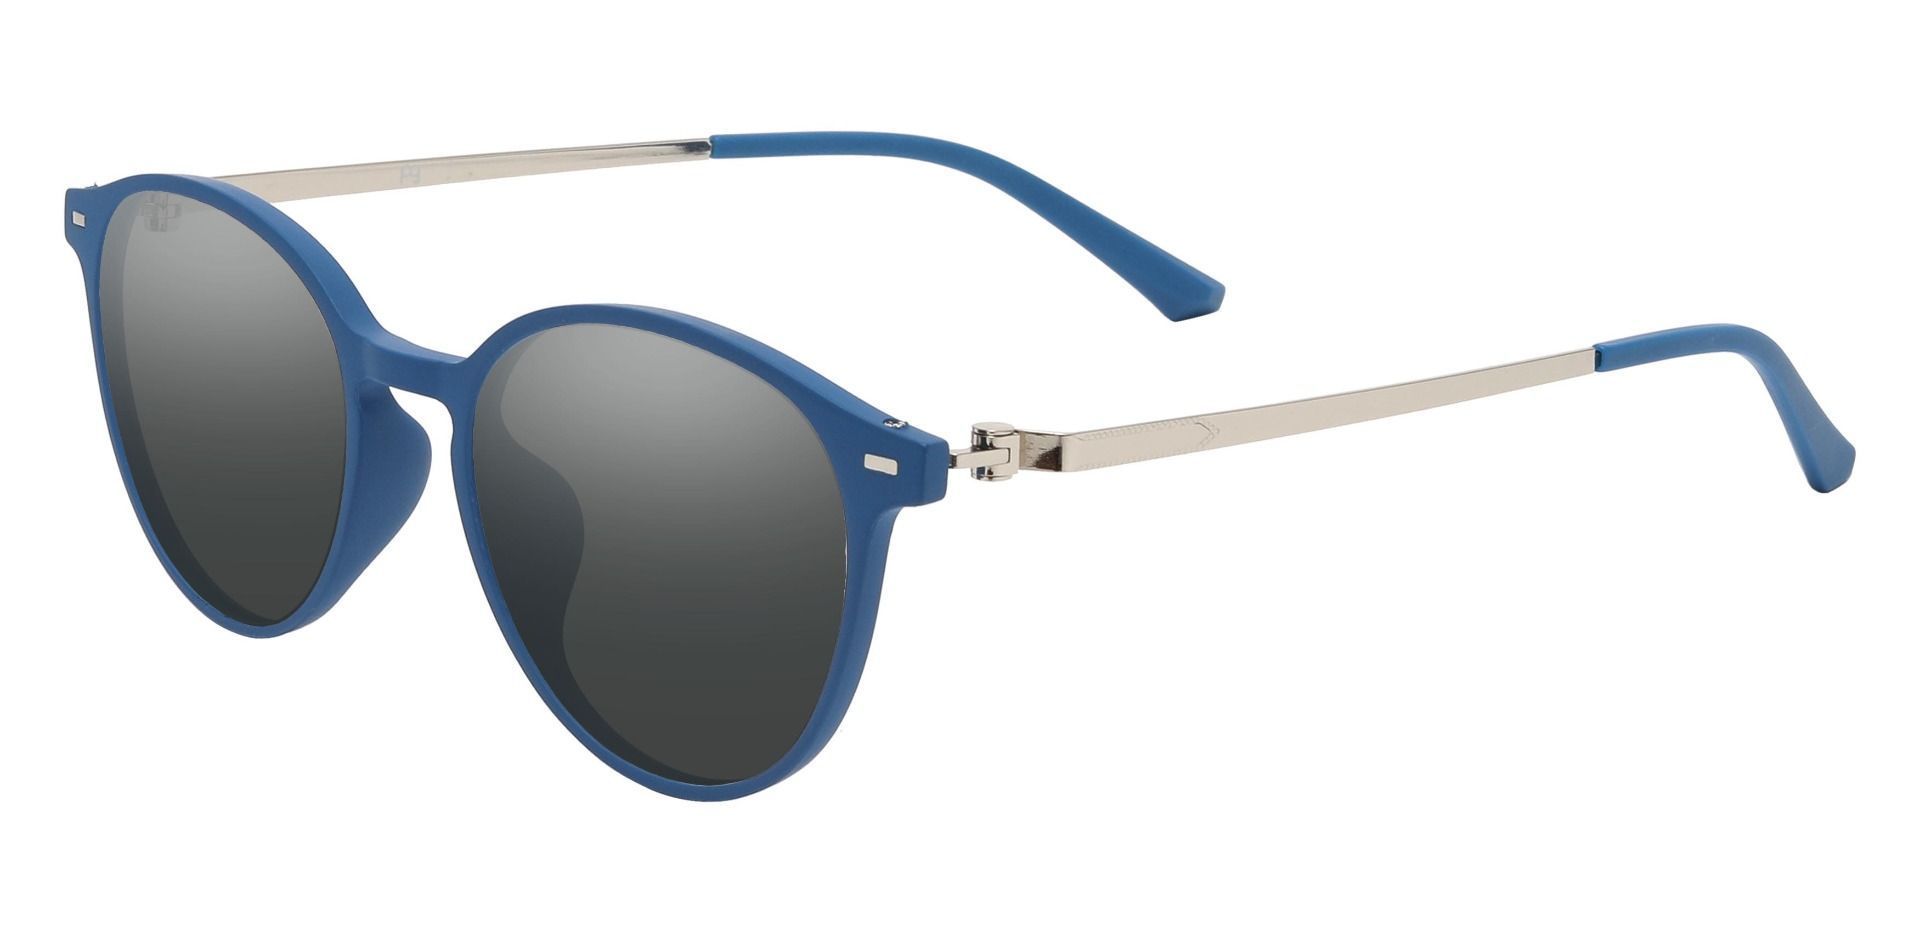 Springer Round Prescription Sunglasses - Blue Frame With Gray Lenses